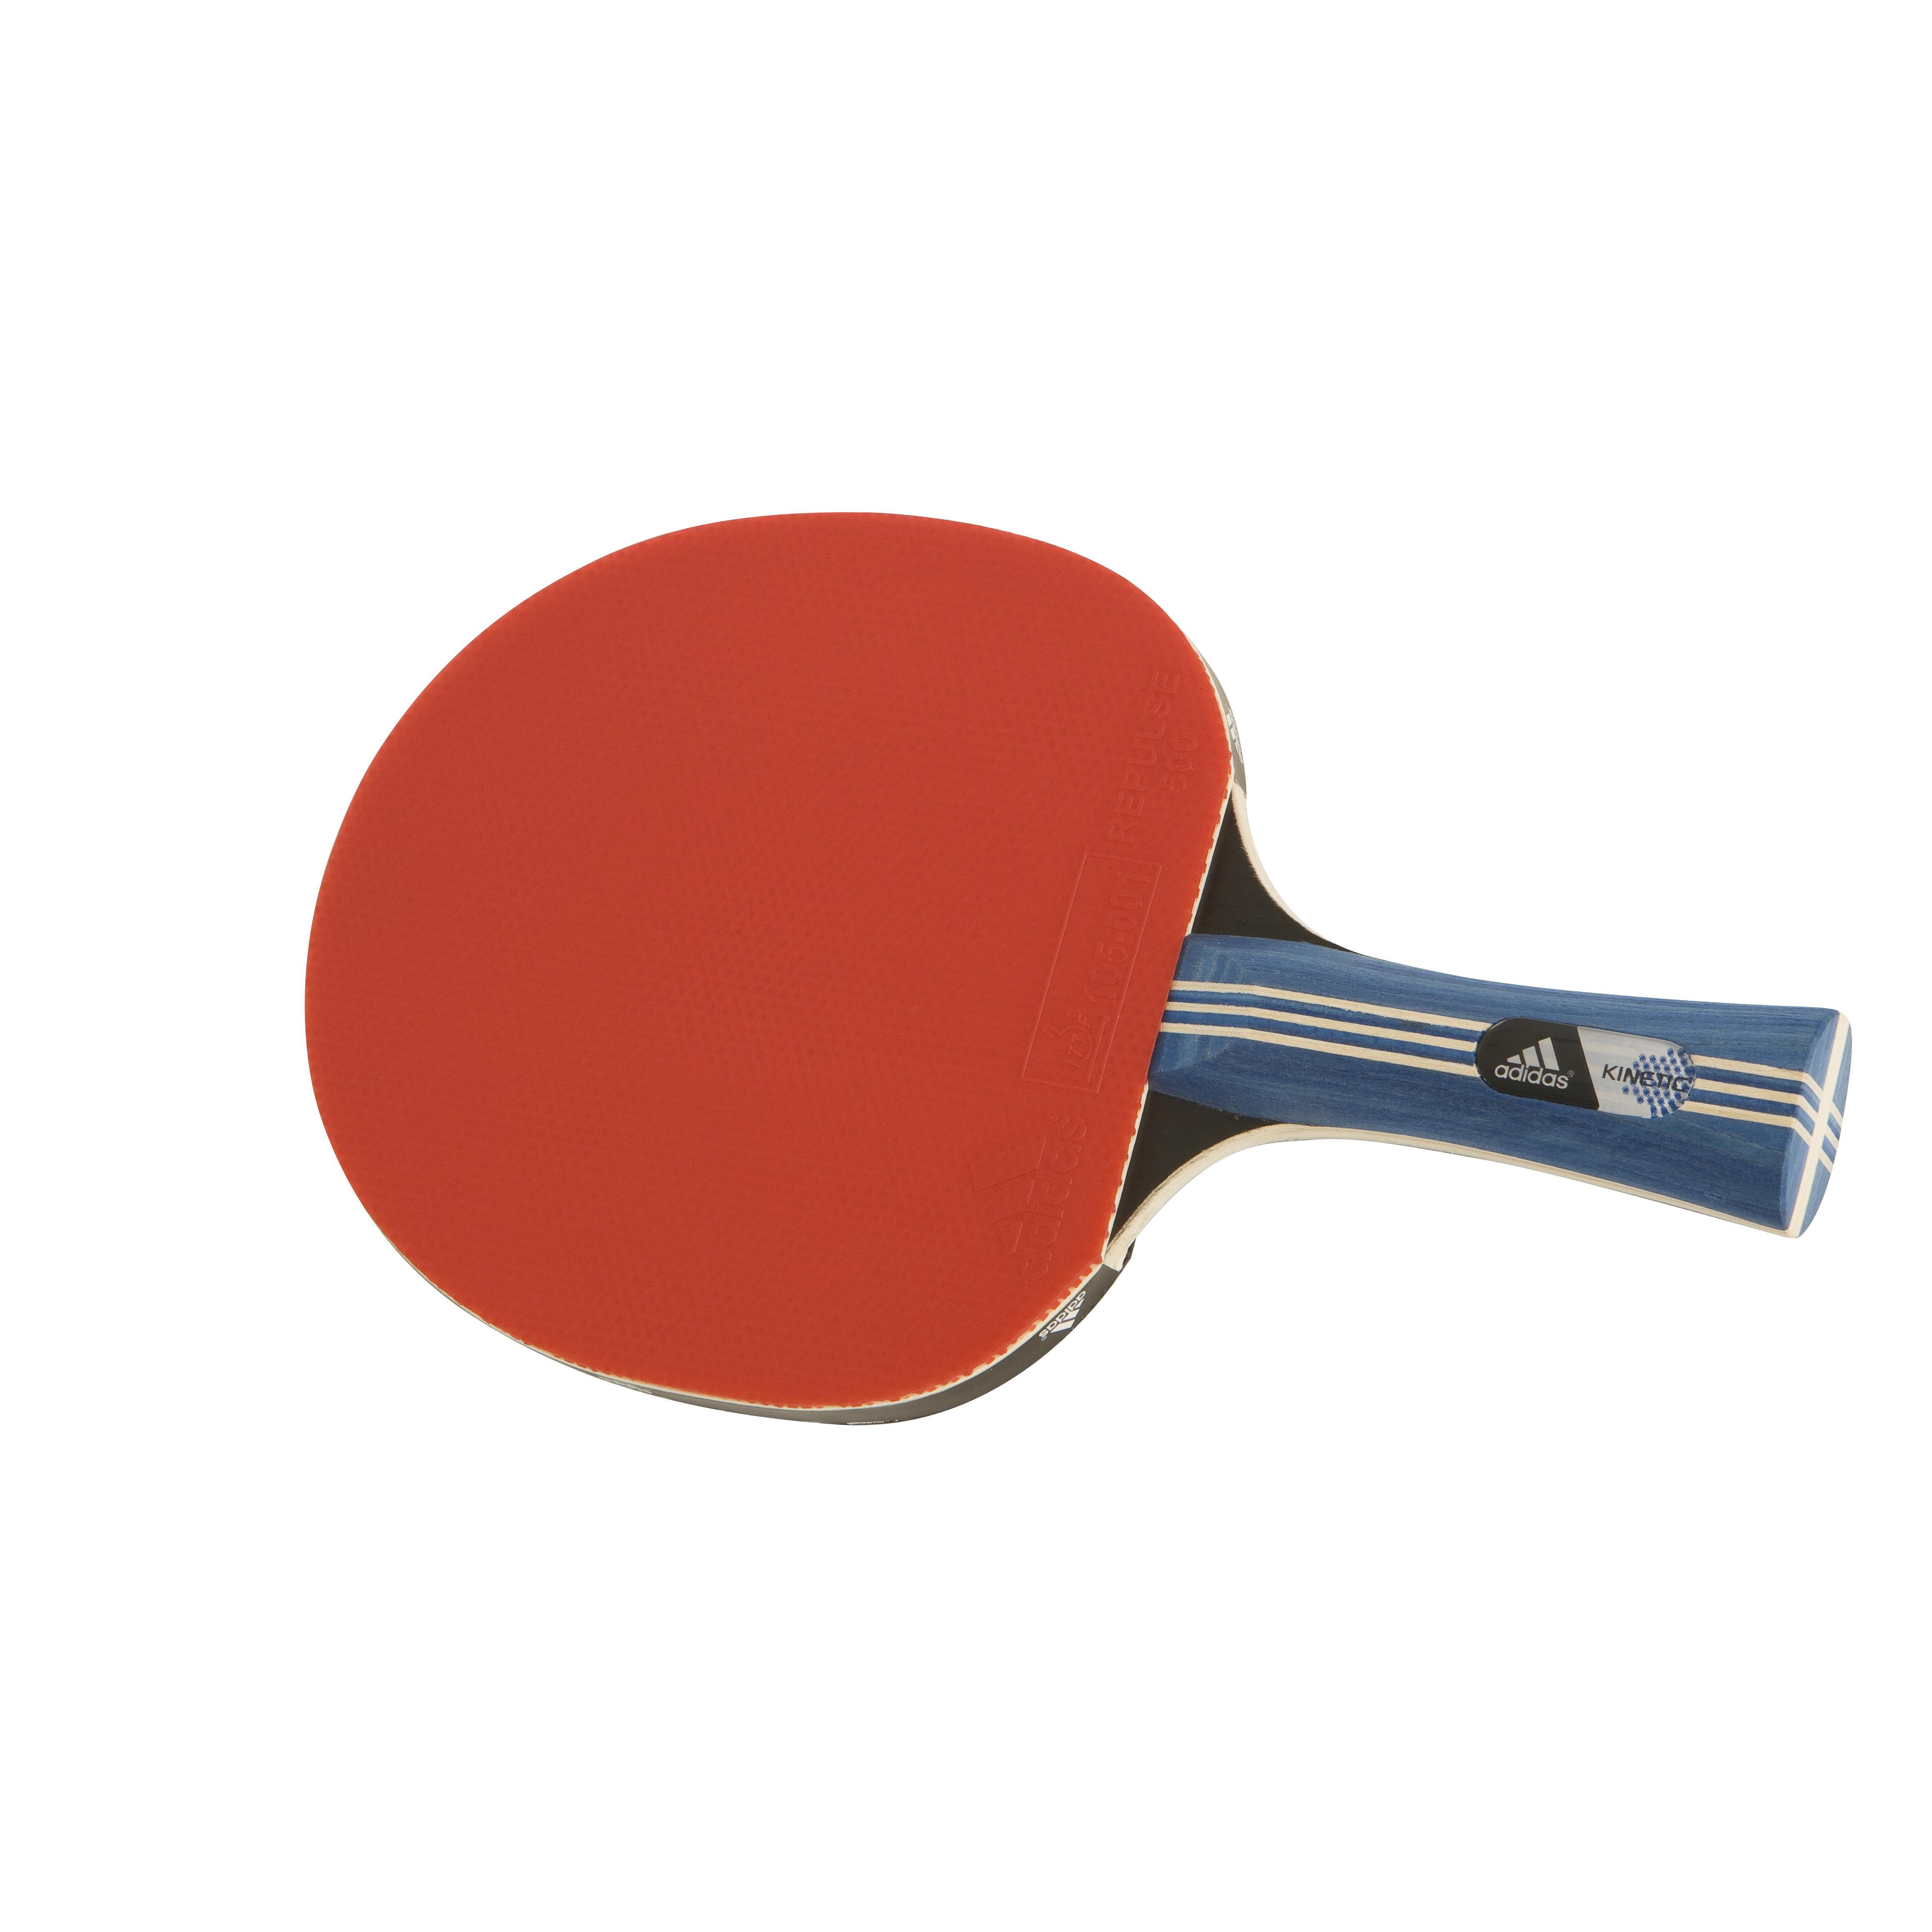 Multicolour Cs2 Control Cartasport Unisex Adult Table Tennis Bat